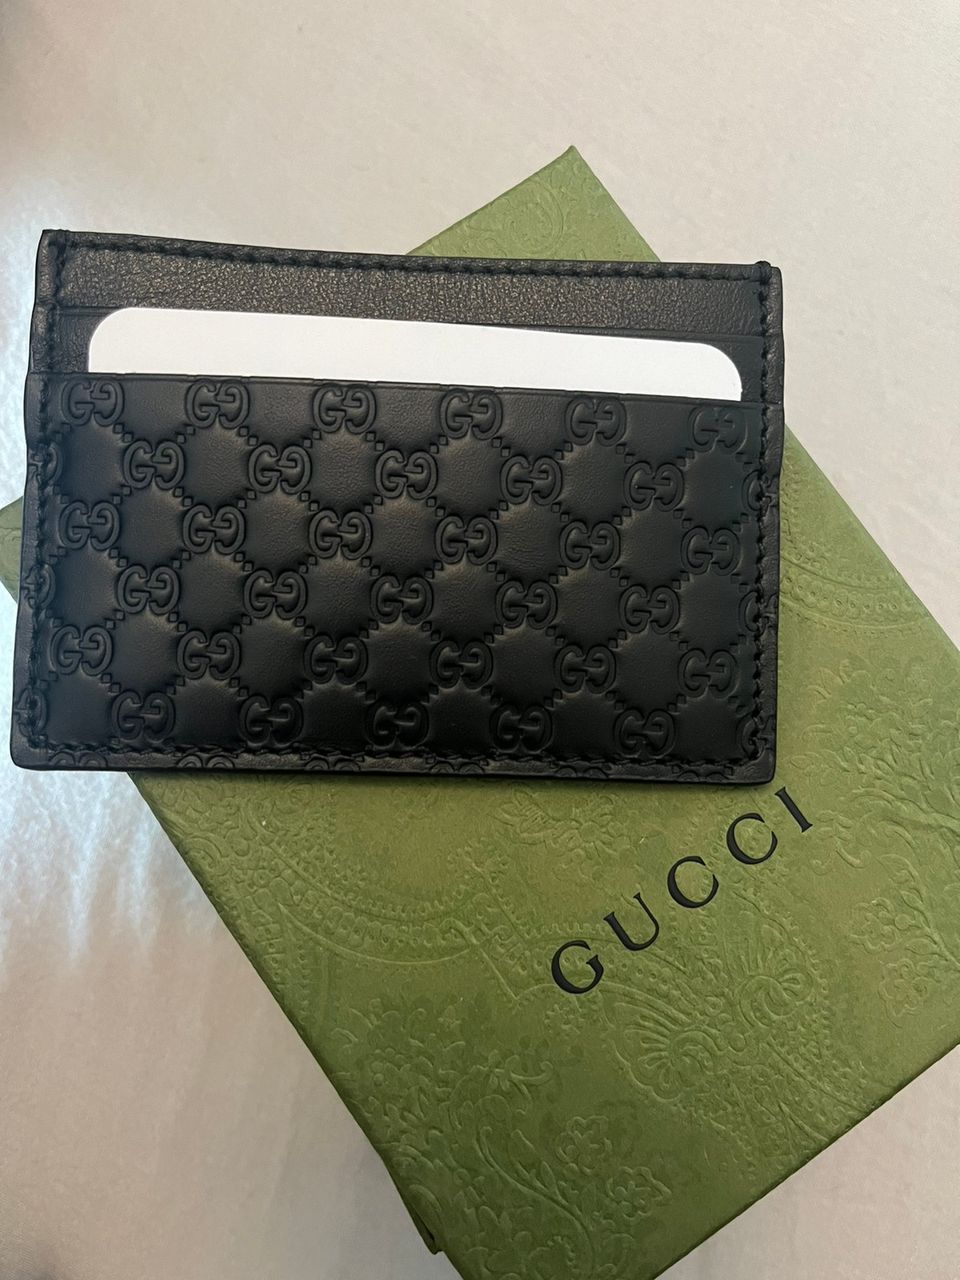 Gucci cardholder